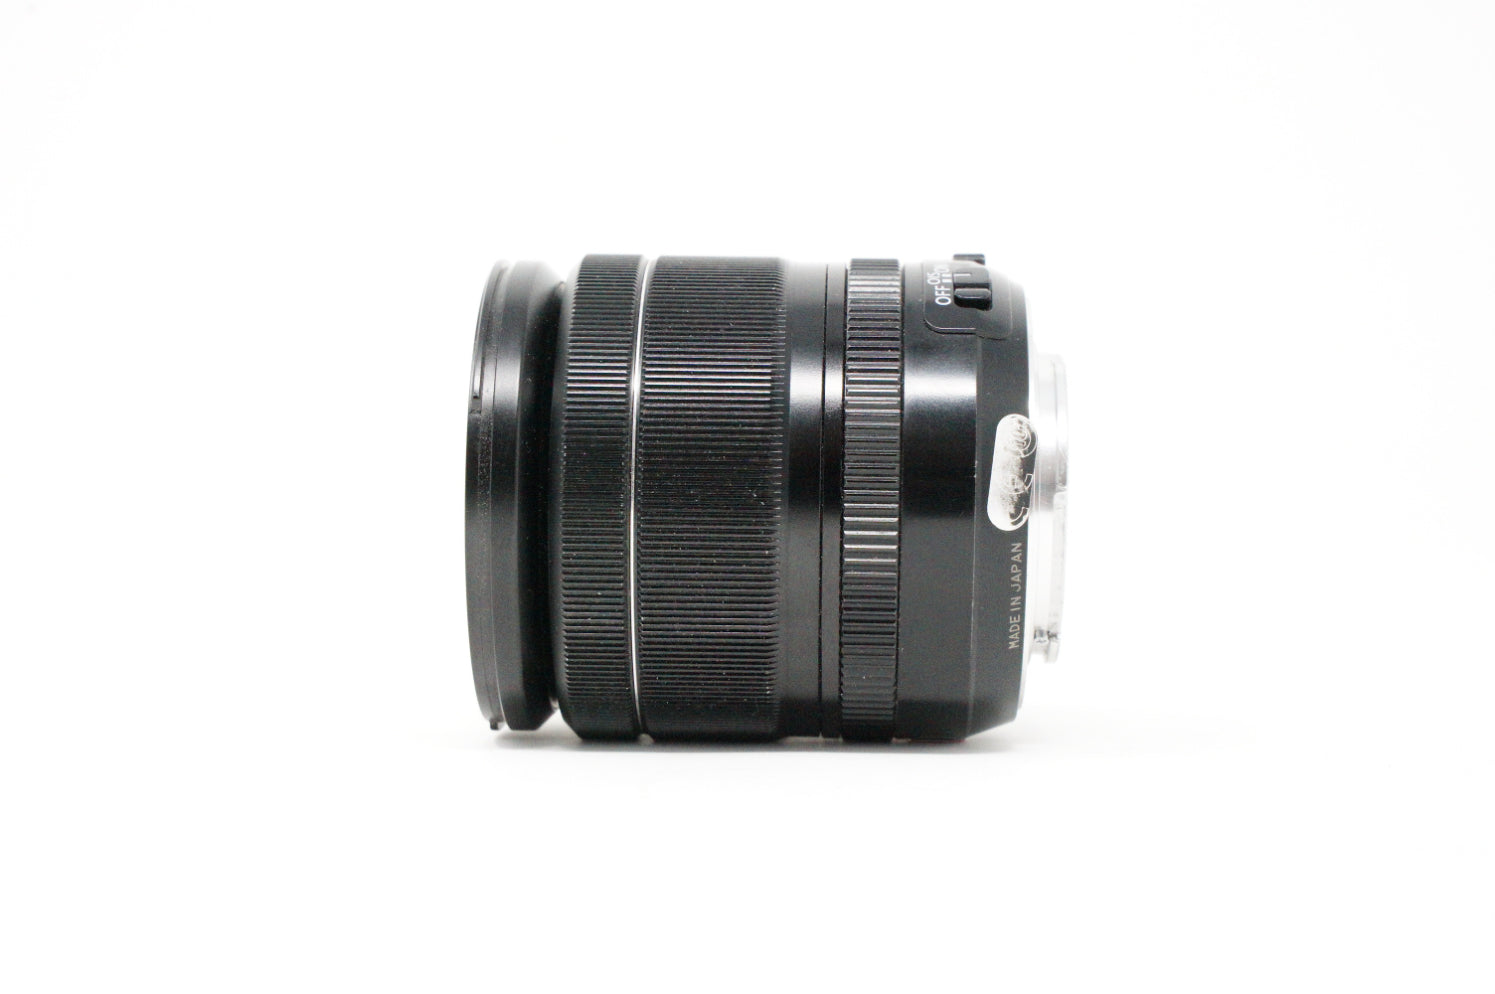 Fujifilm XF 18-55mm F2.8-4 R LM OIS Lens with hood